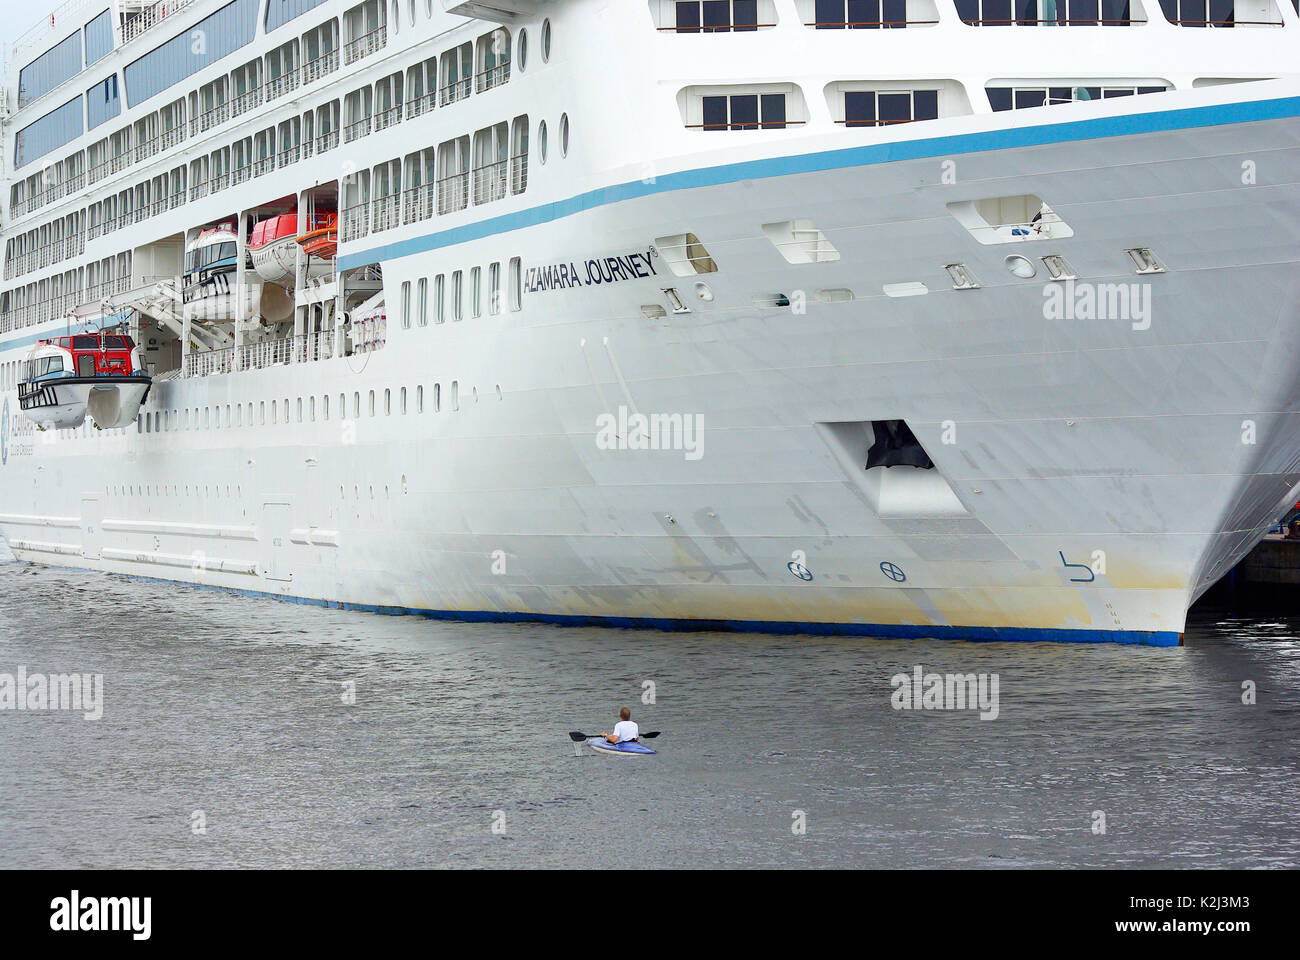 The cruise ship Azamara Journey in the port of Rostock-Warnemunde, Germany. Stock Photo